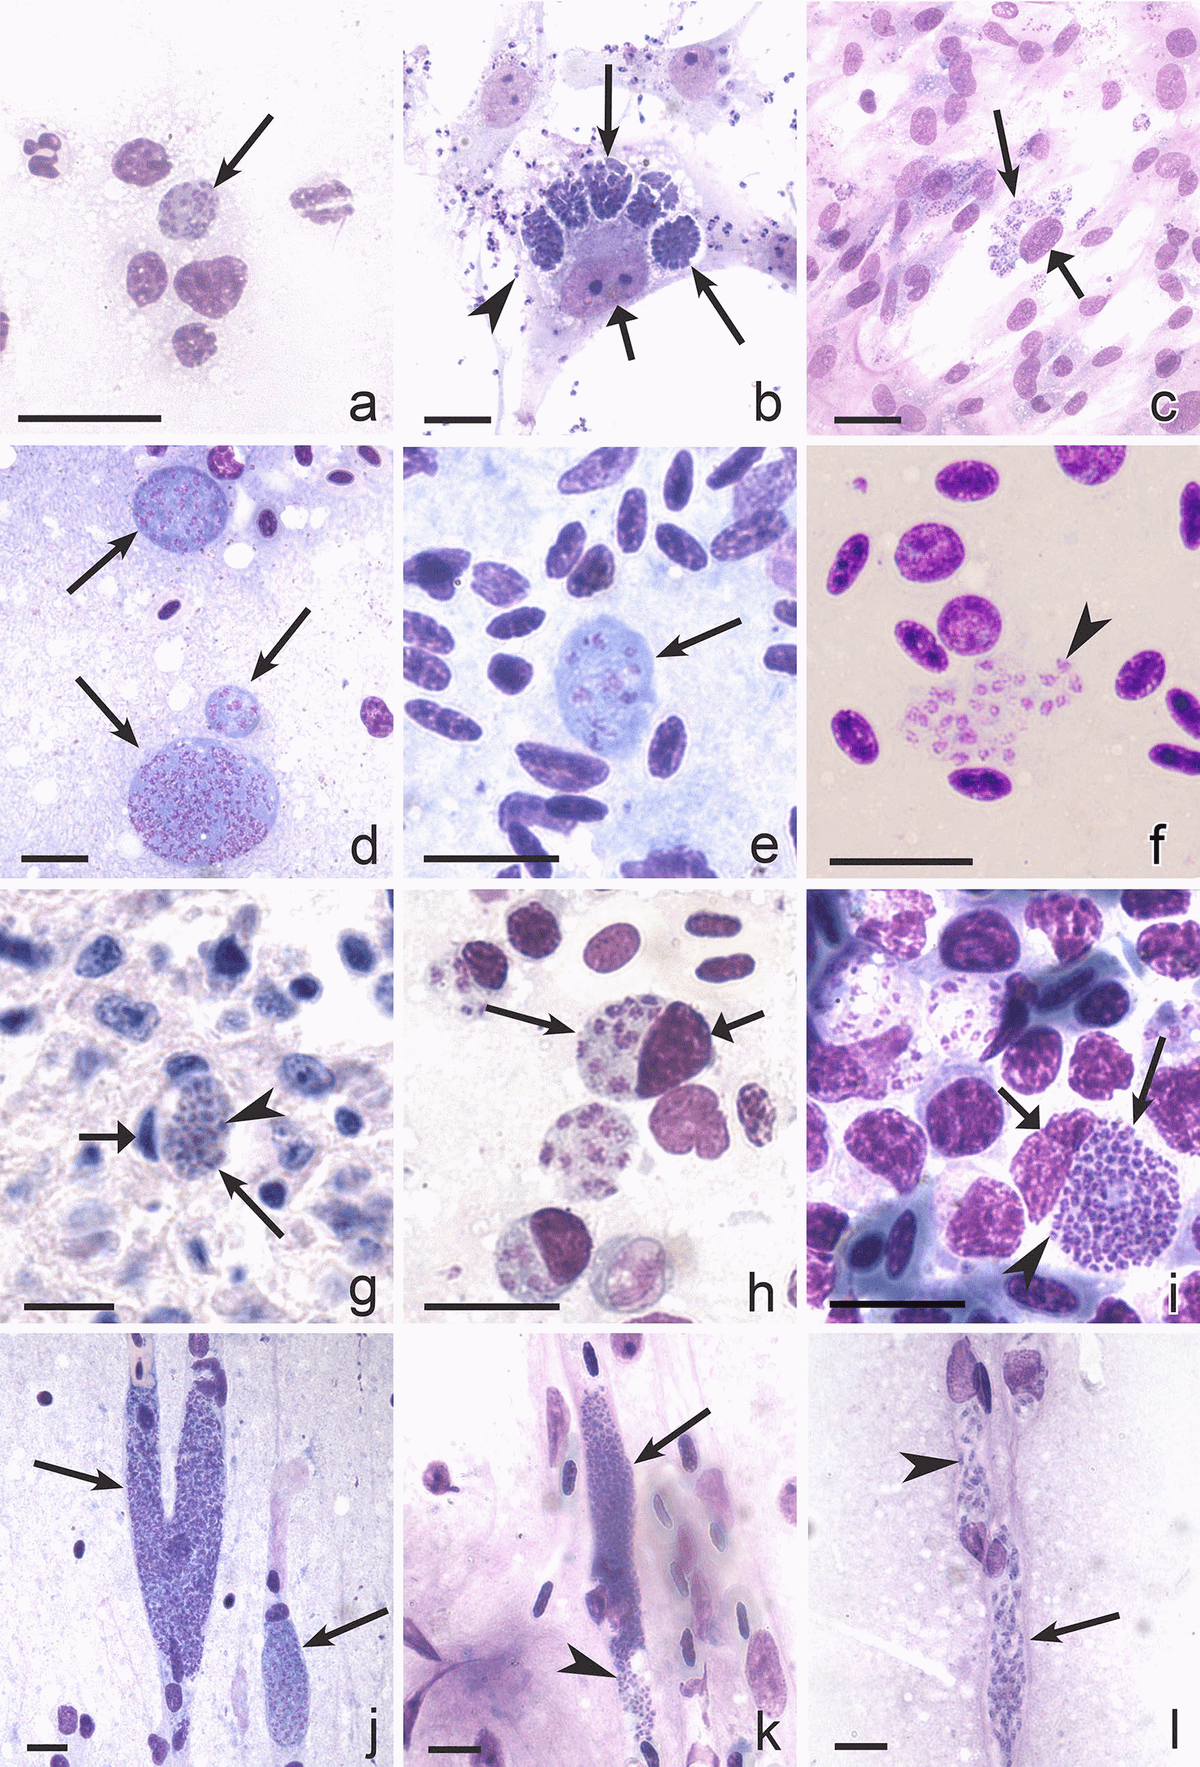 Exo-erythrocytic development of avian malaria and related haemosporidian parasites - Image 3